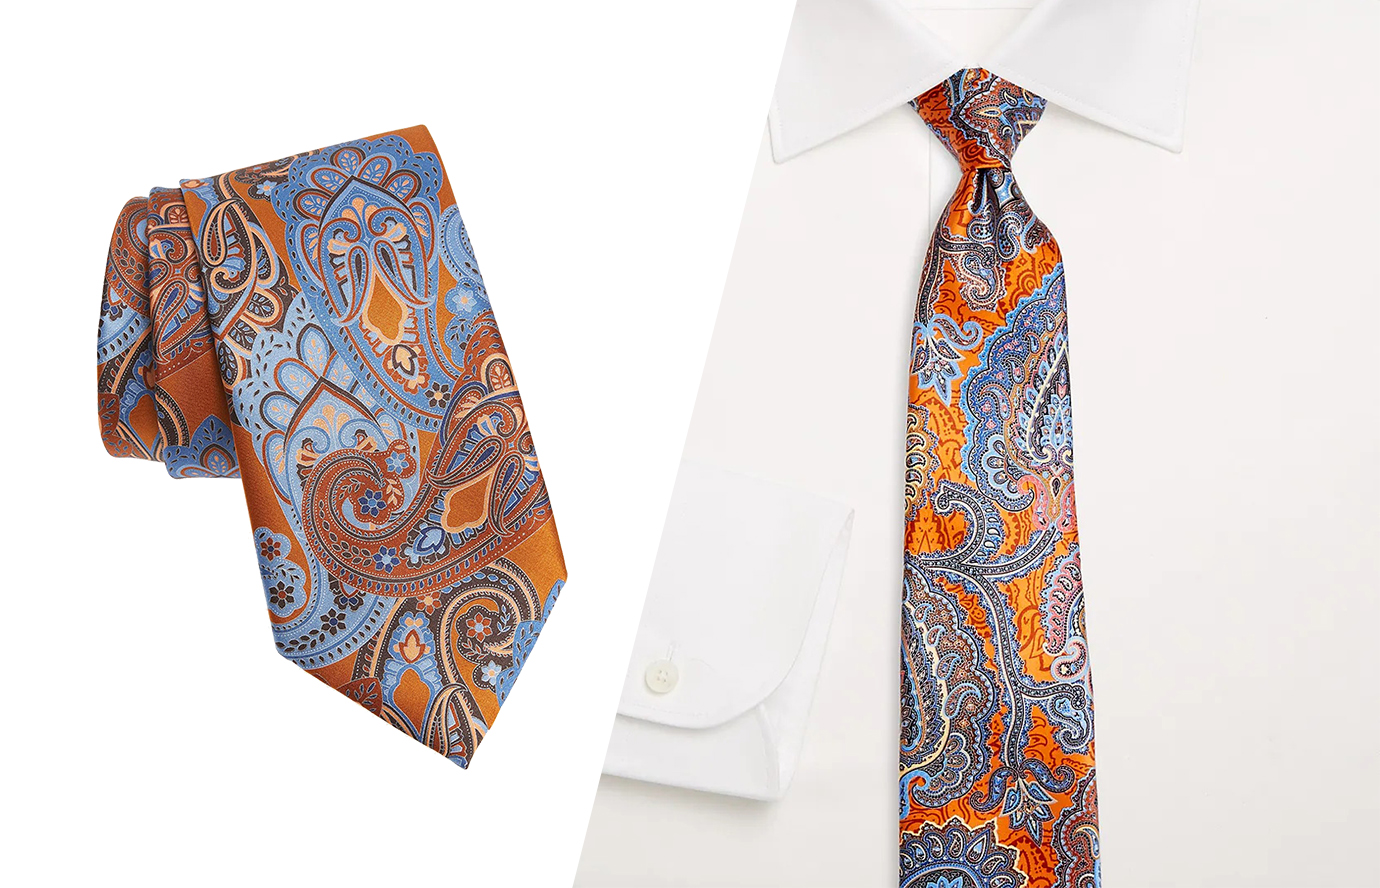 suit accessories: the tie